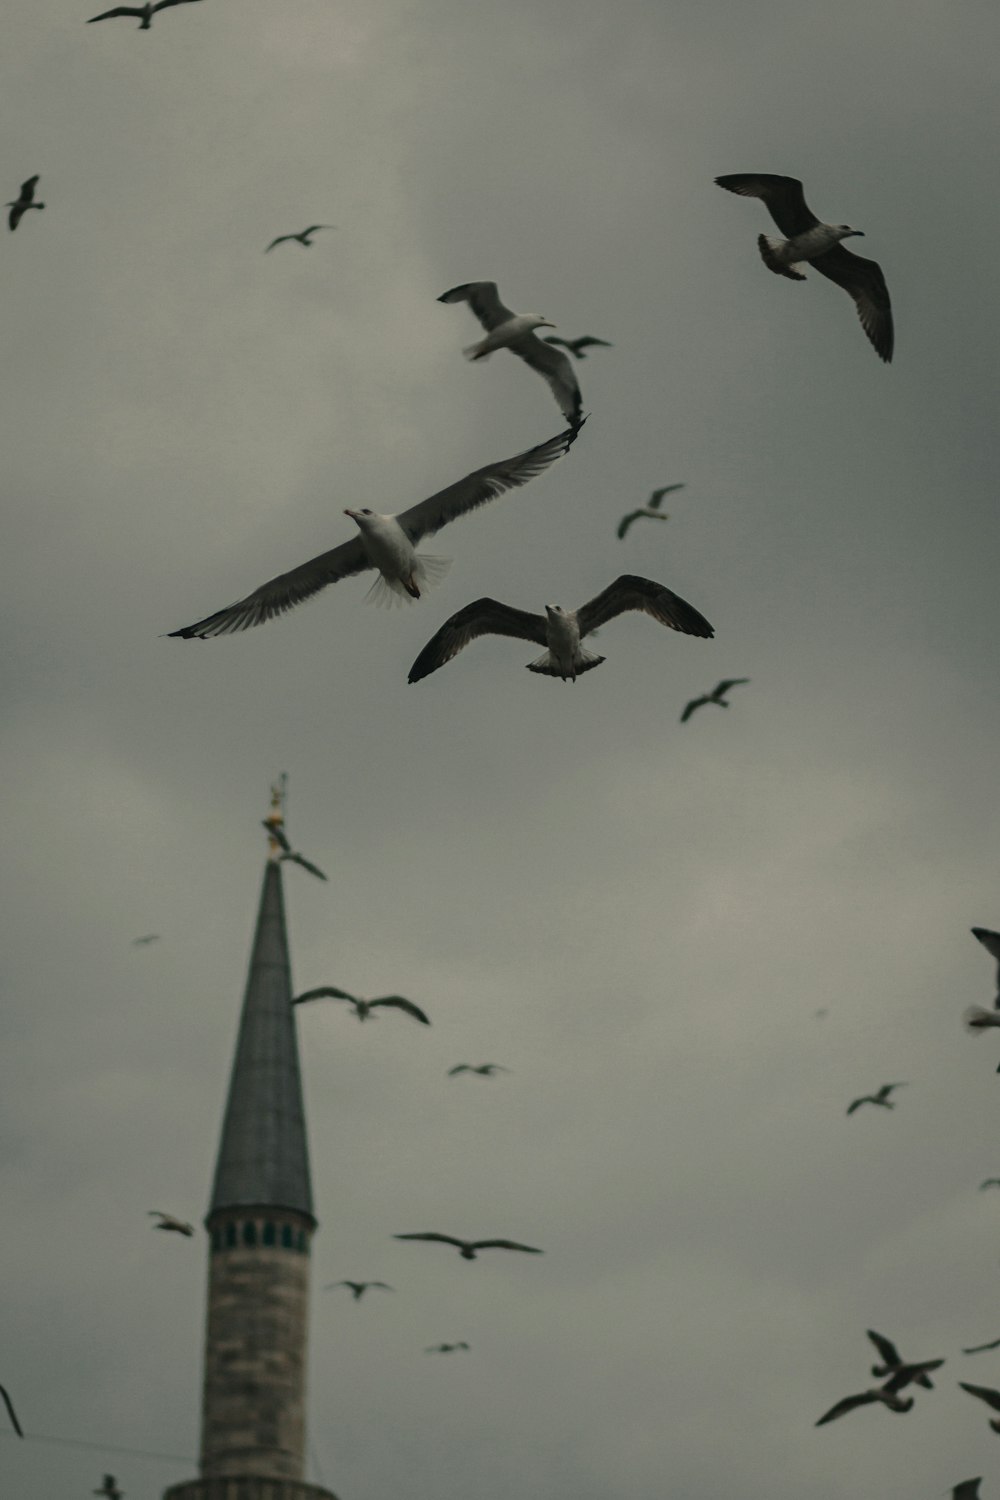 flying seagulls nea tower